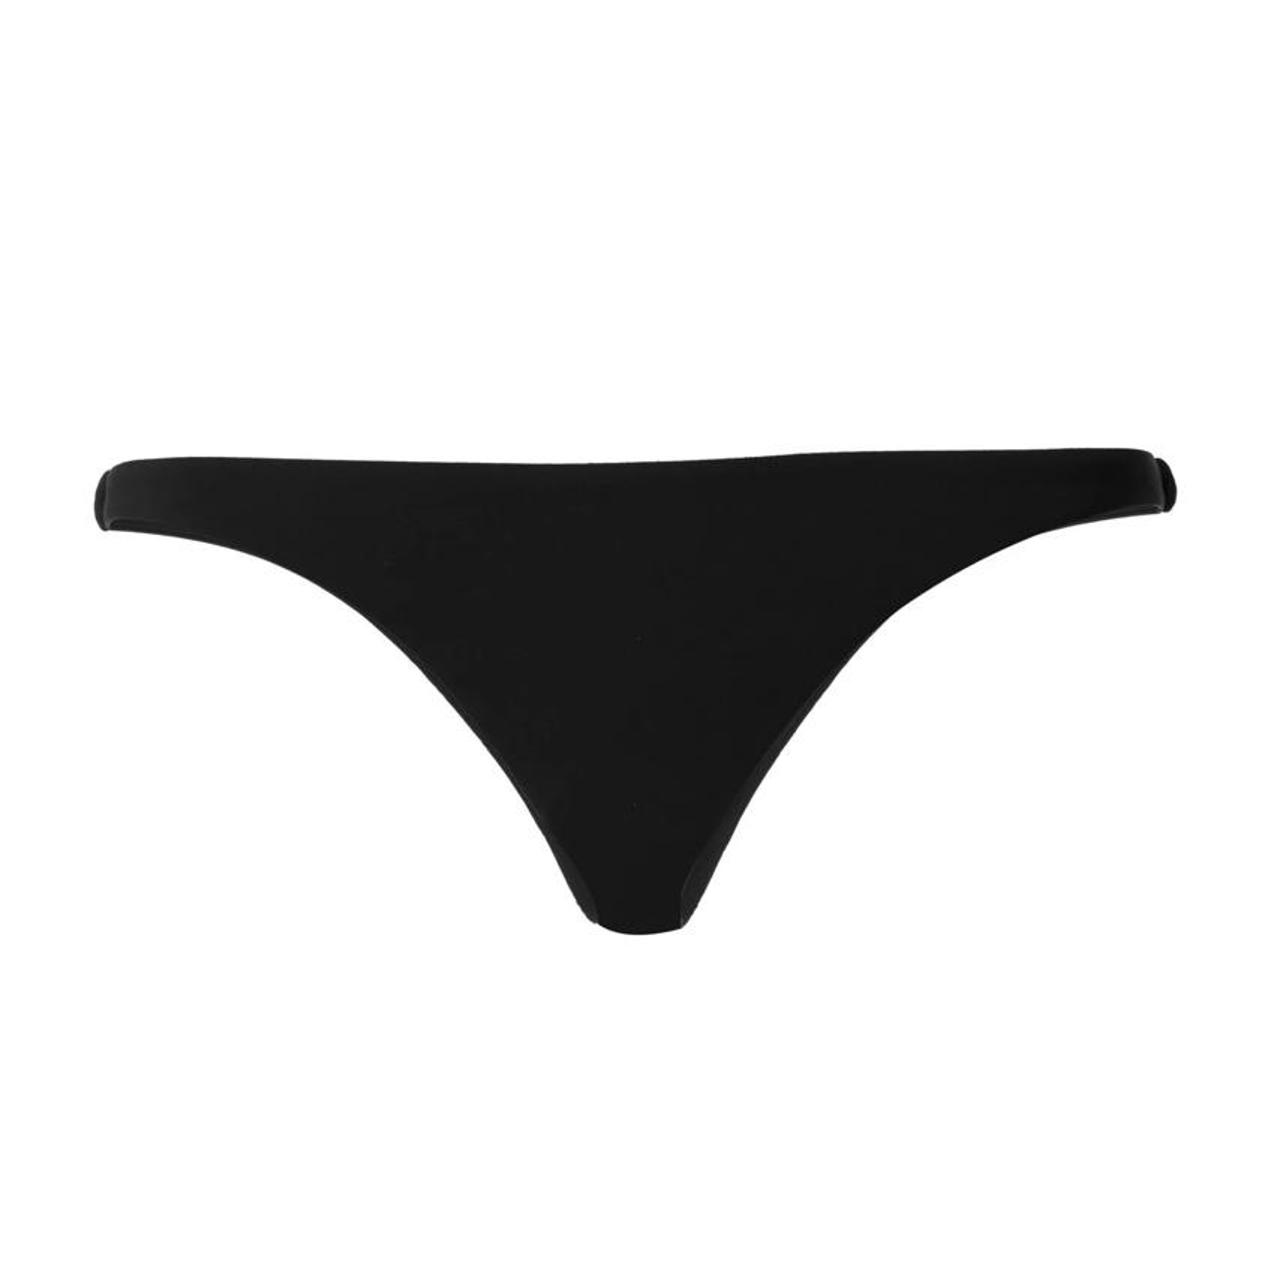 Product Image 2 - Anemos Swim
The classic cheeky bikini